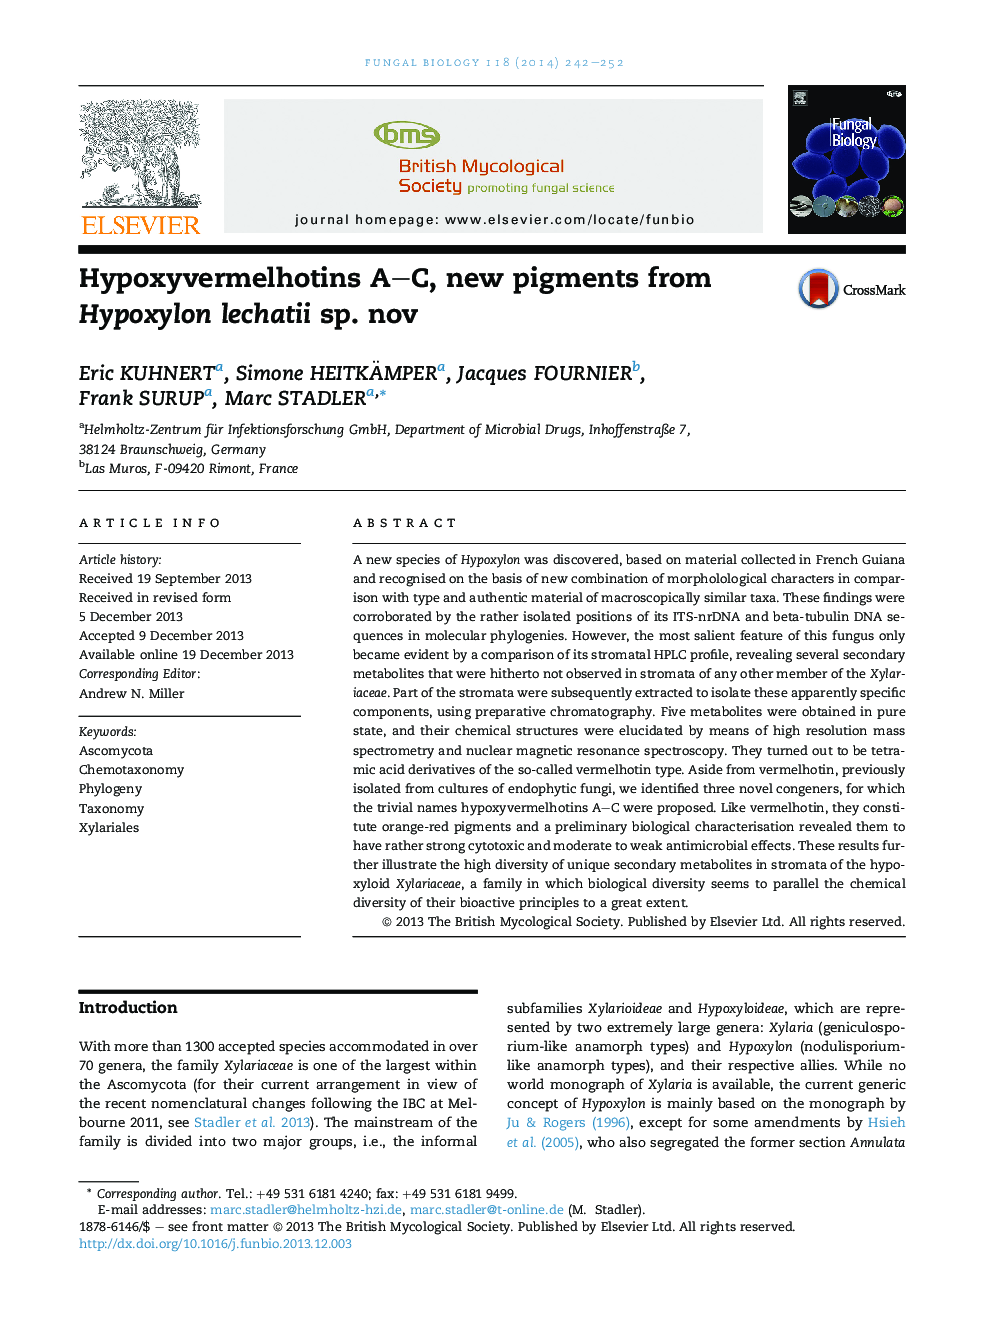 Hypoxyvermelhotins A-C, new pigments from Hypoxylon lechatii sp. nov